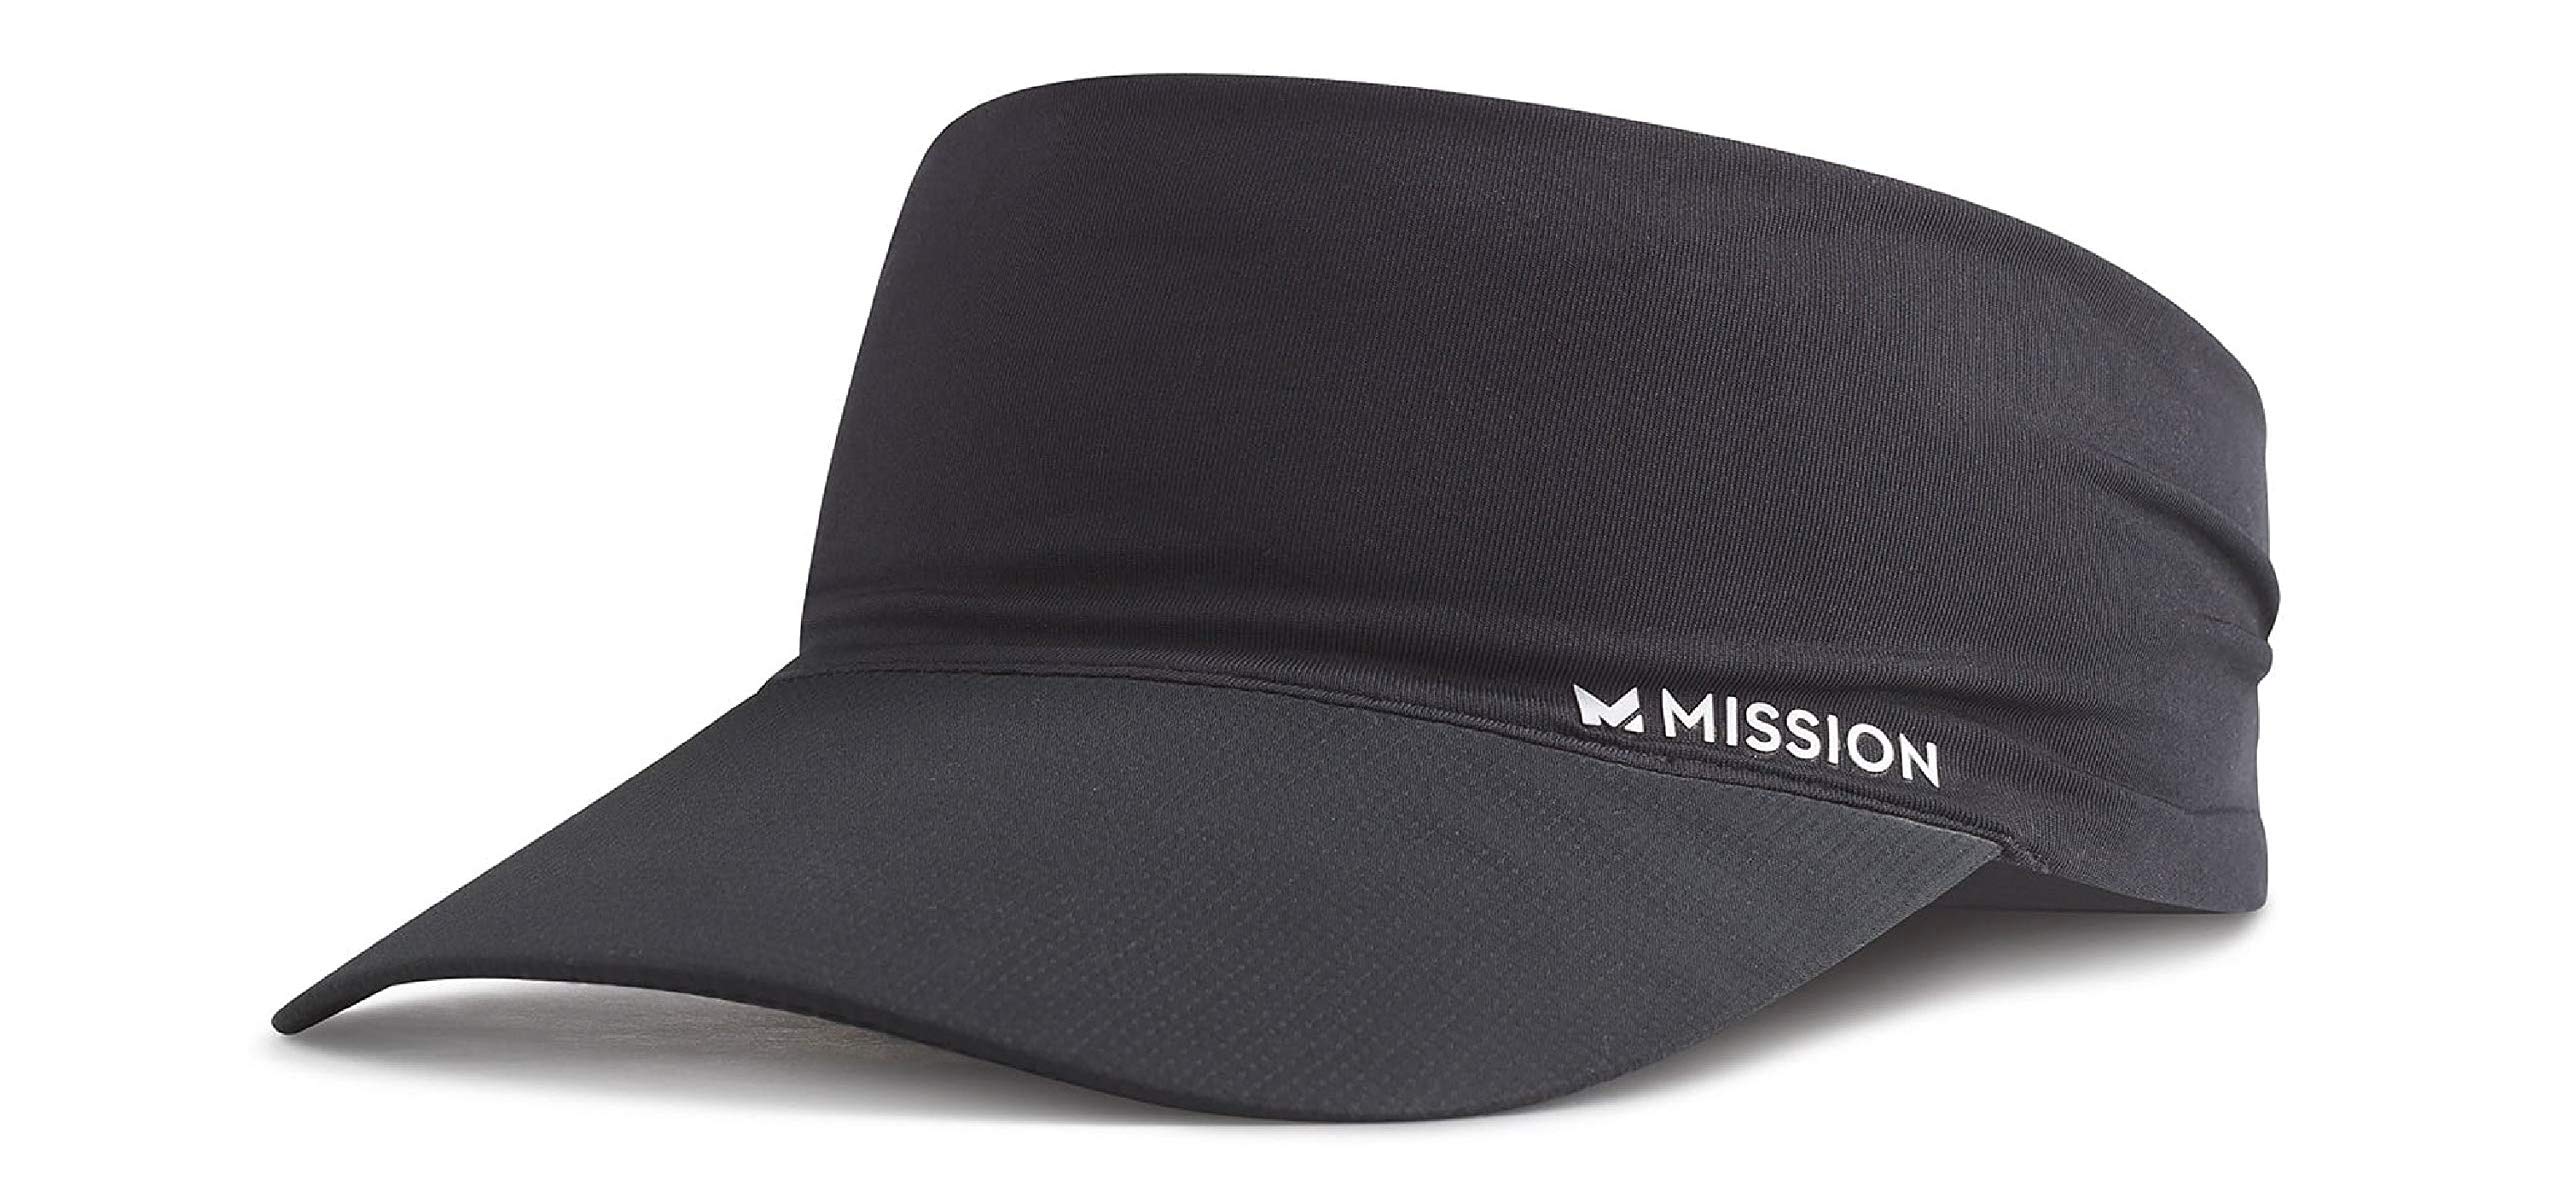 MISSION Cooling Stretchy Visor - Unisex Visor Hat for Men and Women, No  Slip Band, UPF 50